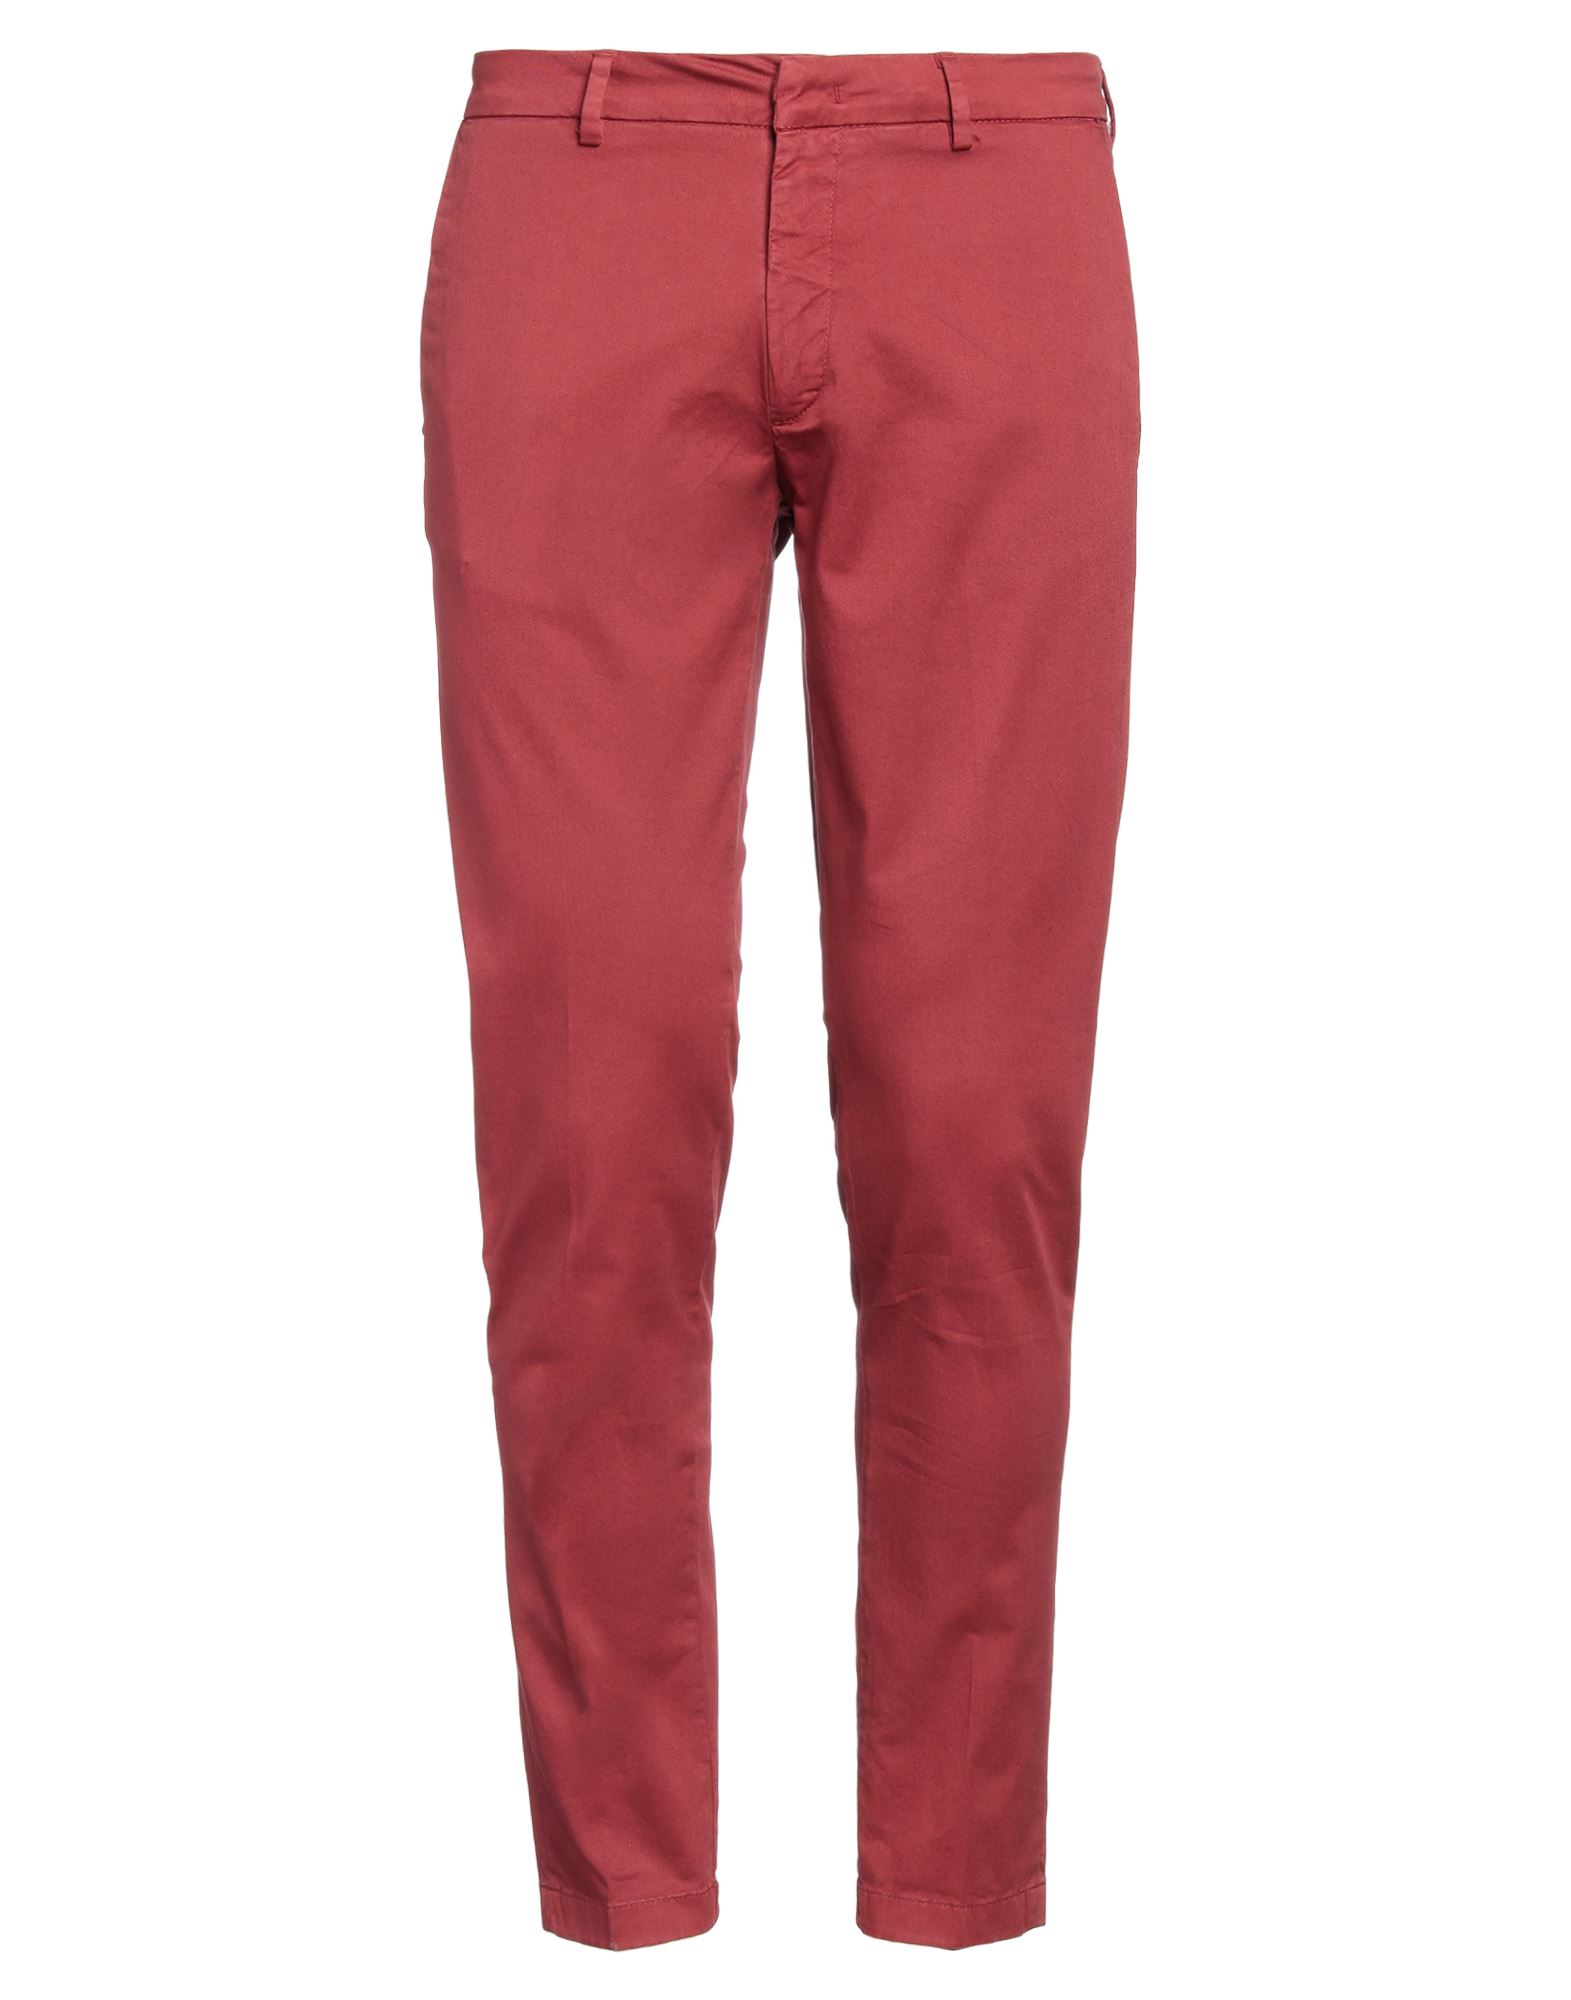 Gazzarrini Pants In Red